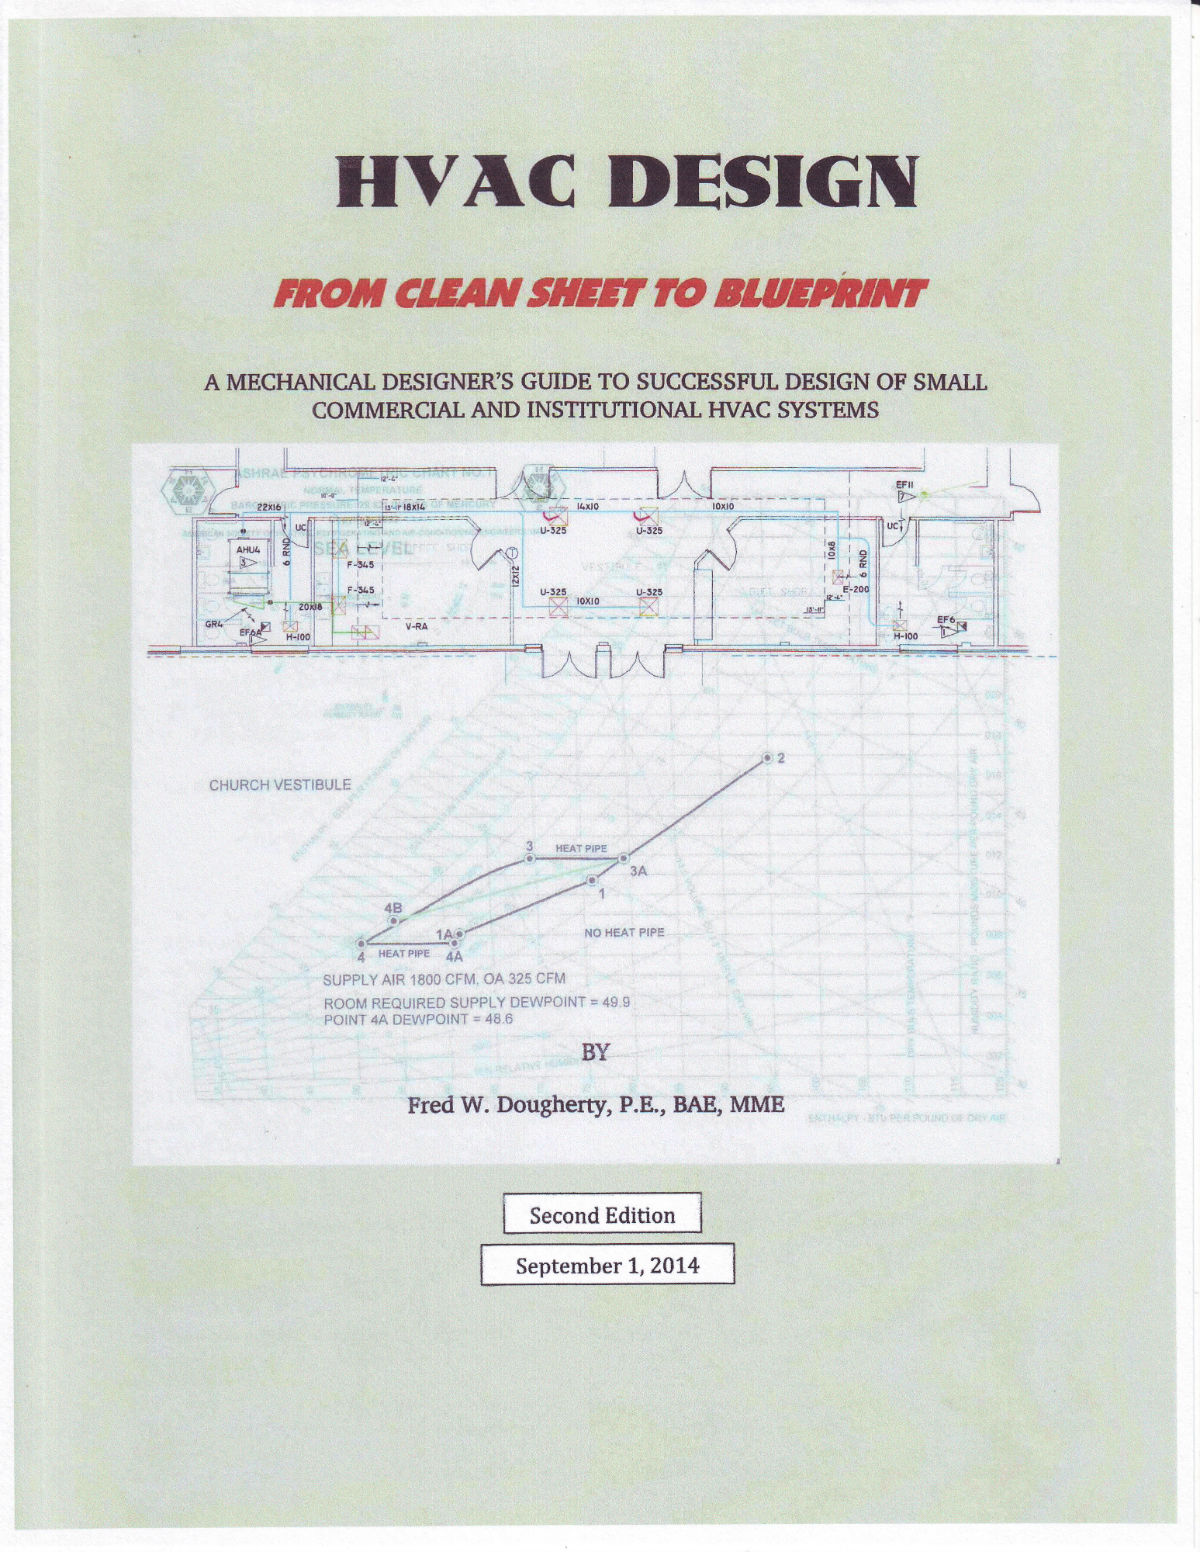 HVAC Design 2nd Ed Book Cover.jpg